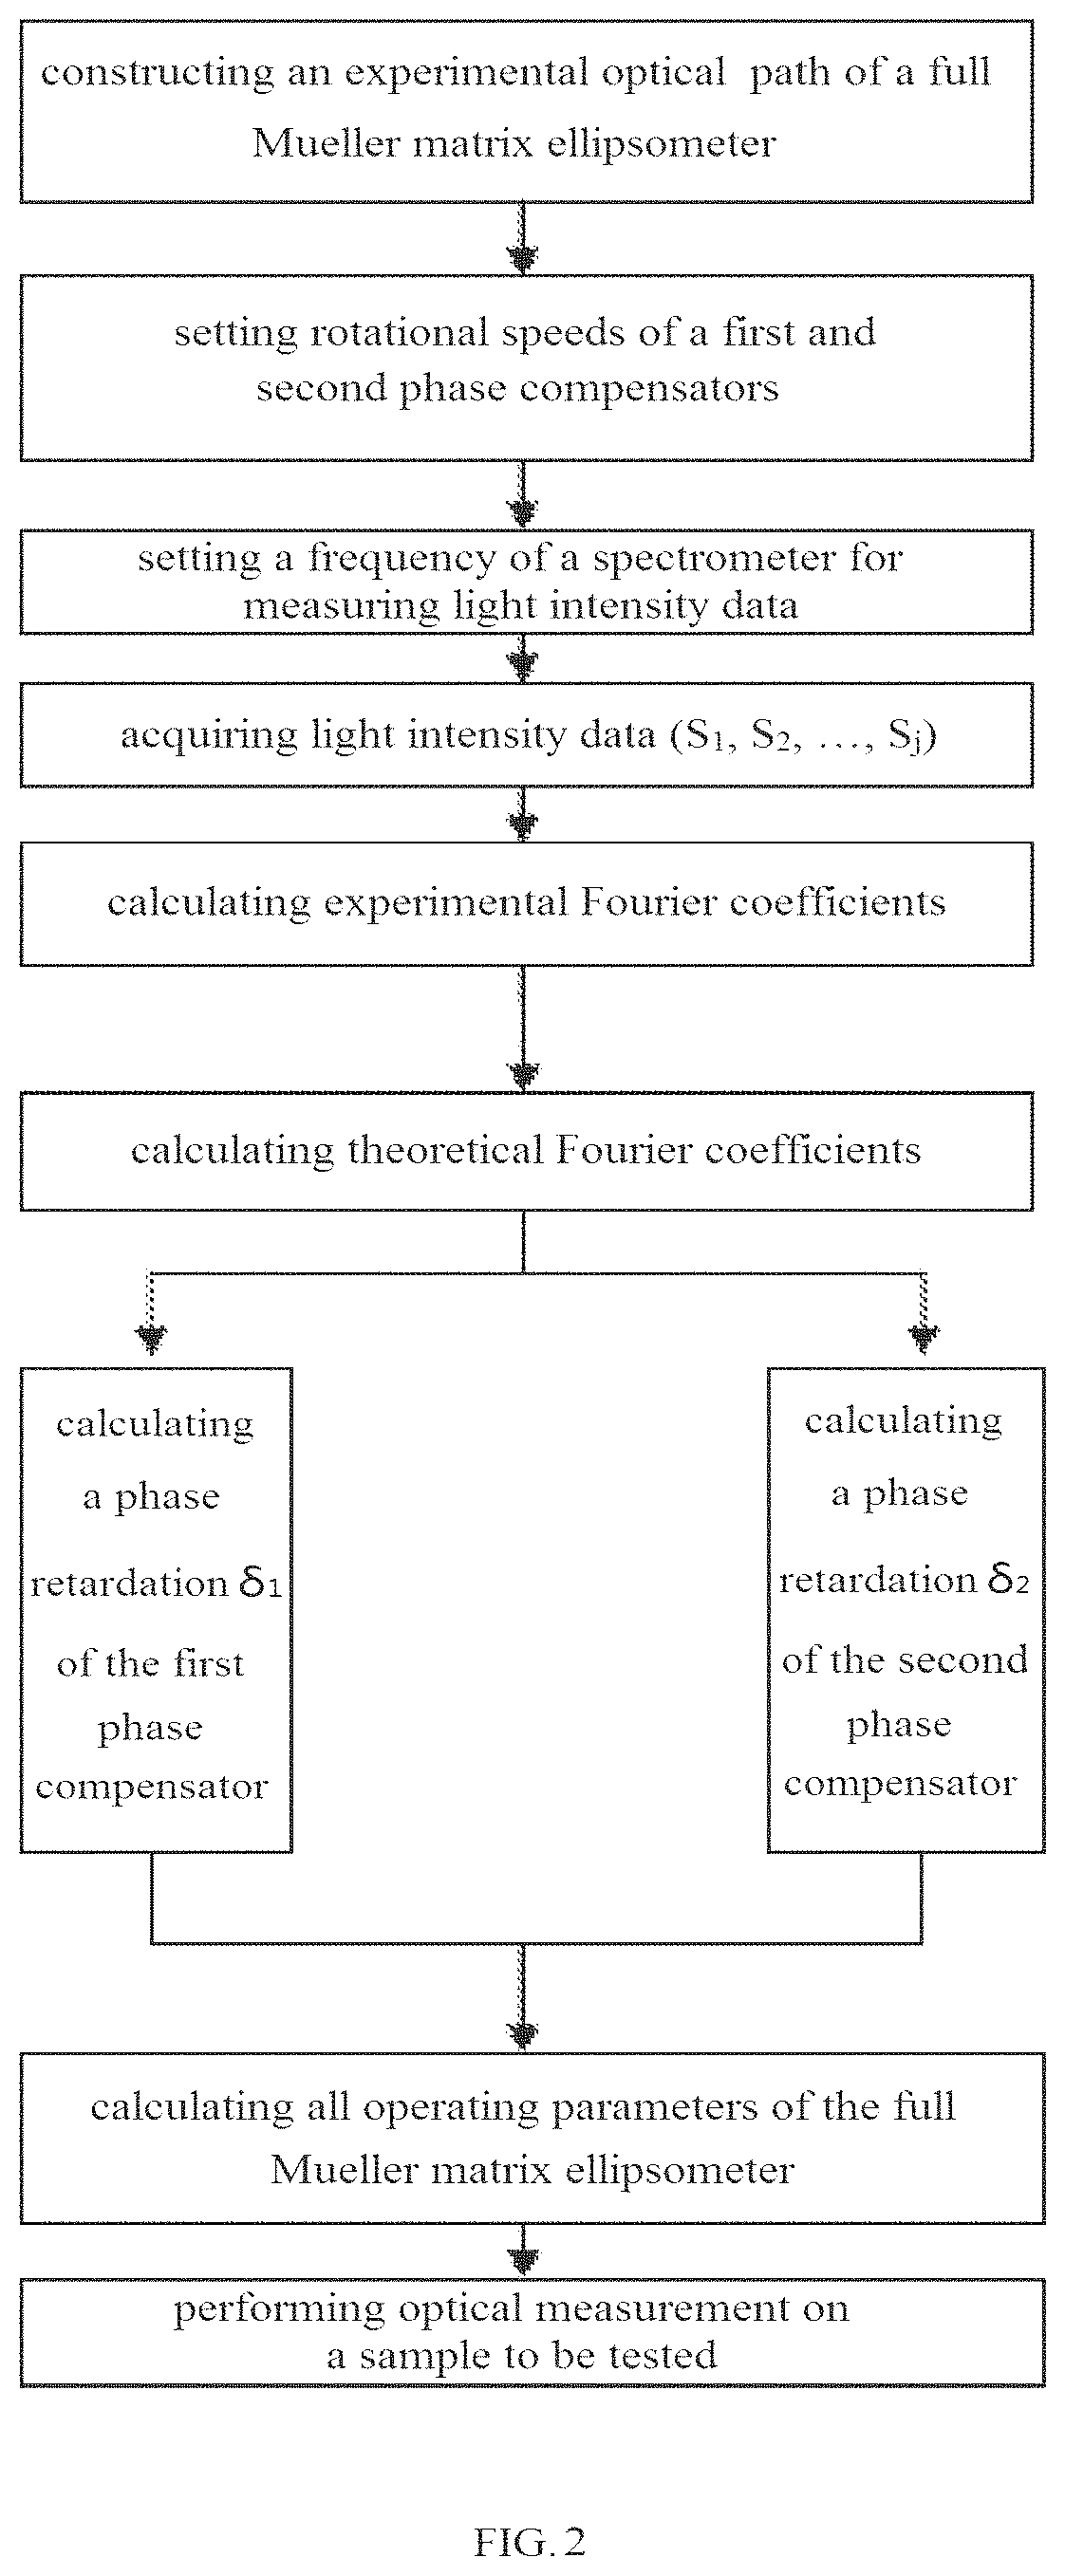 Method for conducting optical measurement usingfull Mueller matrix ellipsometer